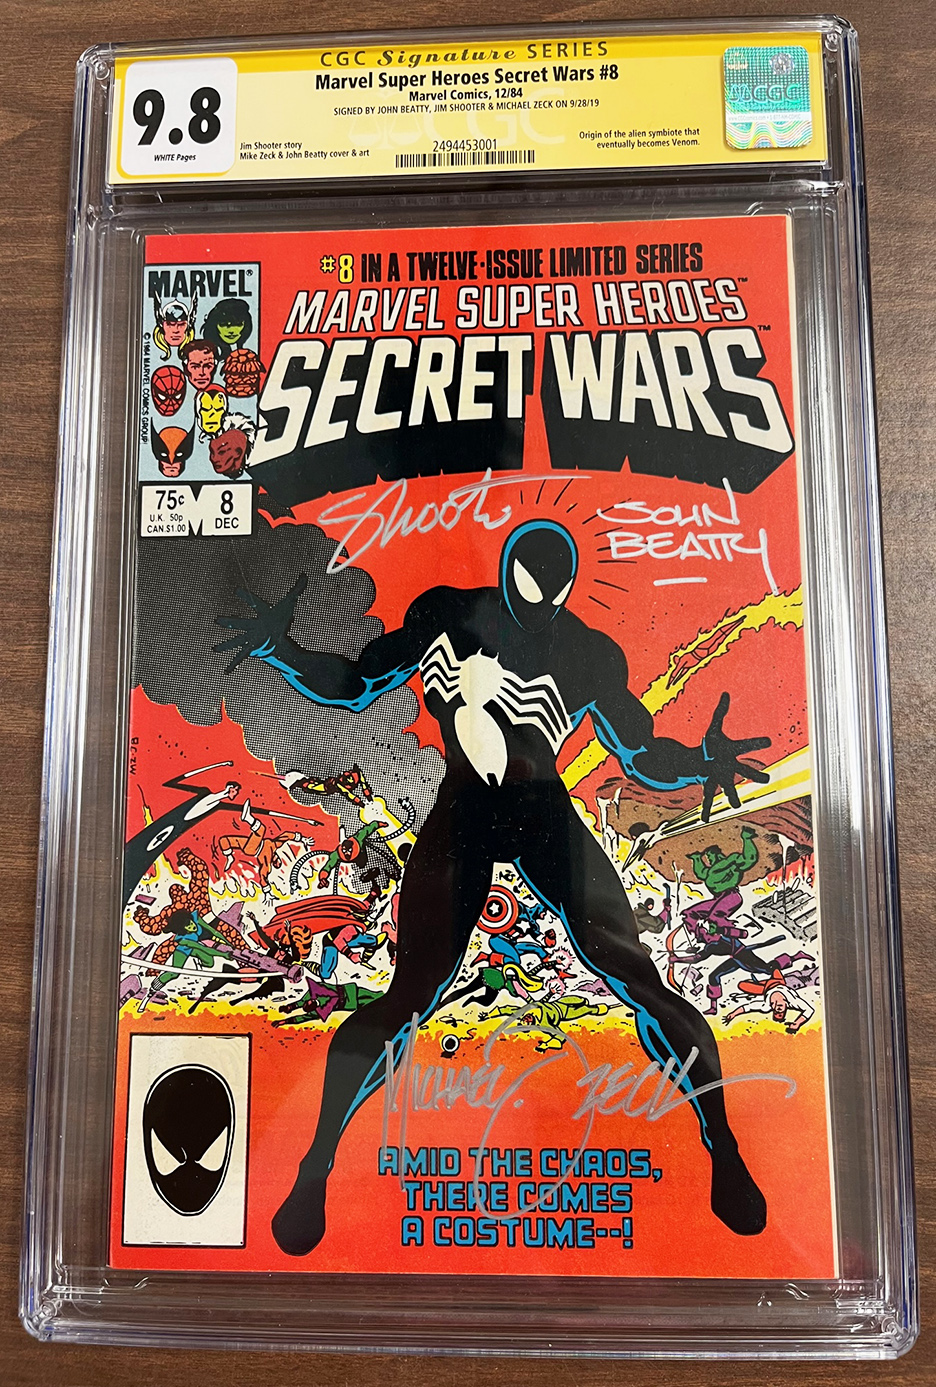 Marvel Super Heroes Secret Wars #8 CGC 9.8 Front Cover